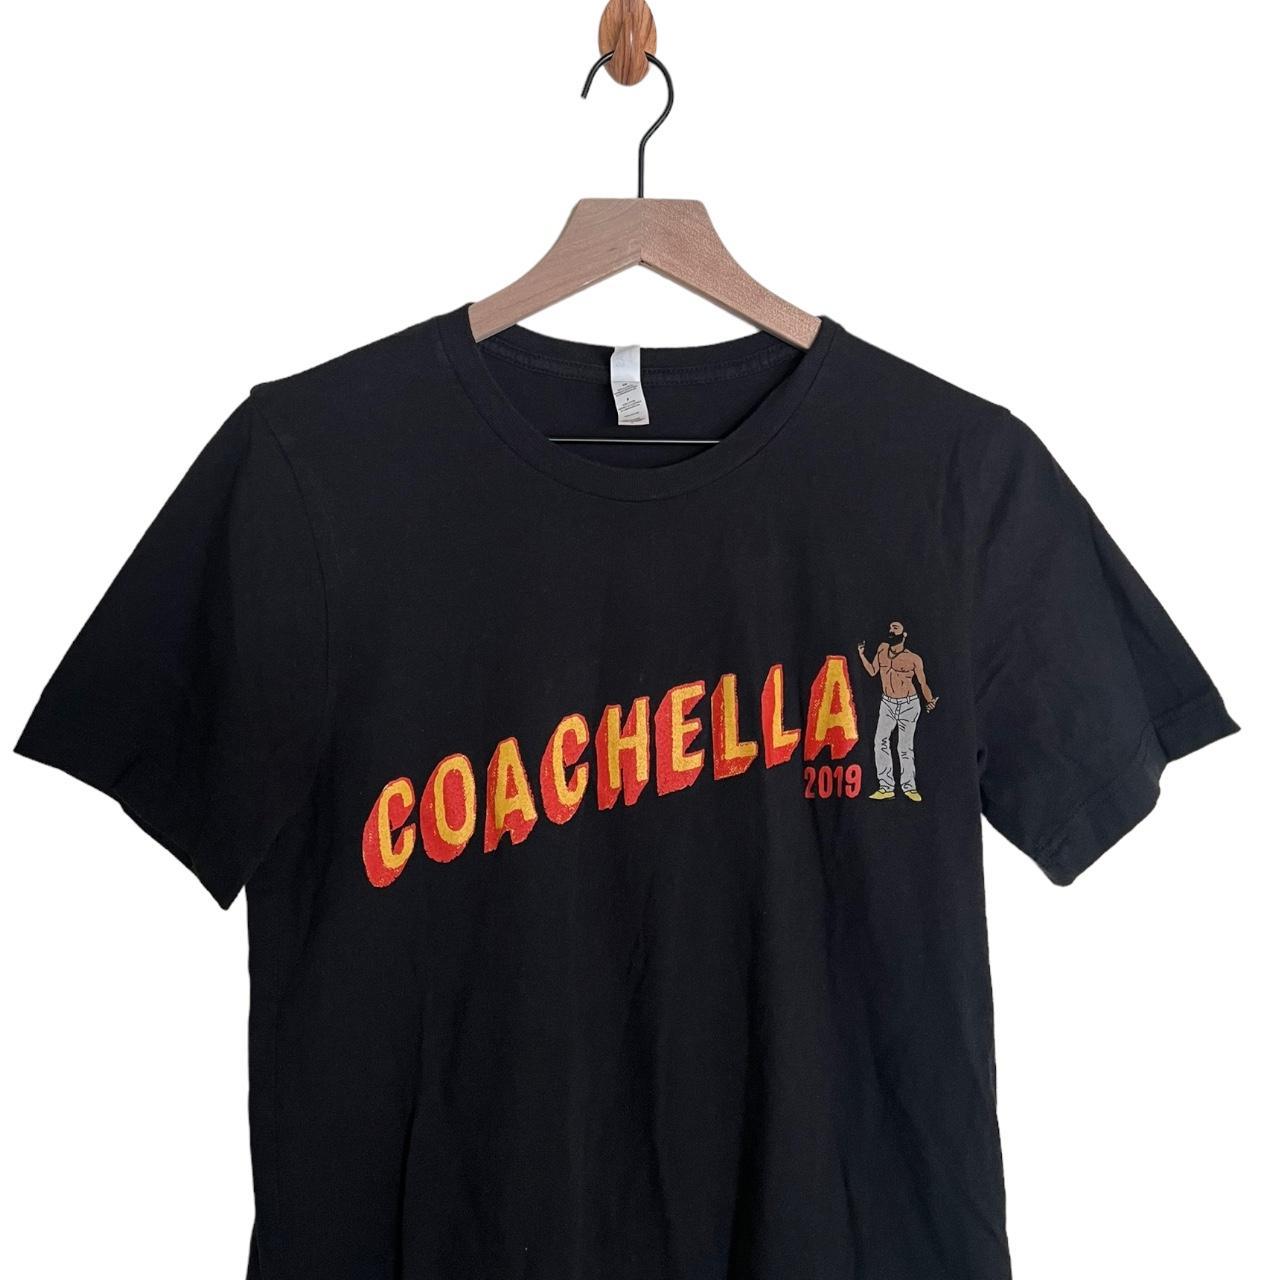 Coachella 2019 限定 CHILDISH GAMBINO Tシャツ